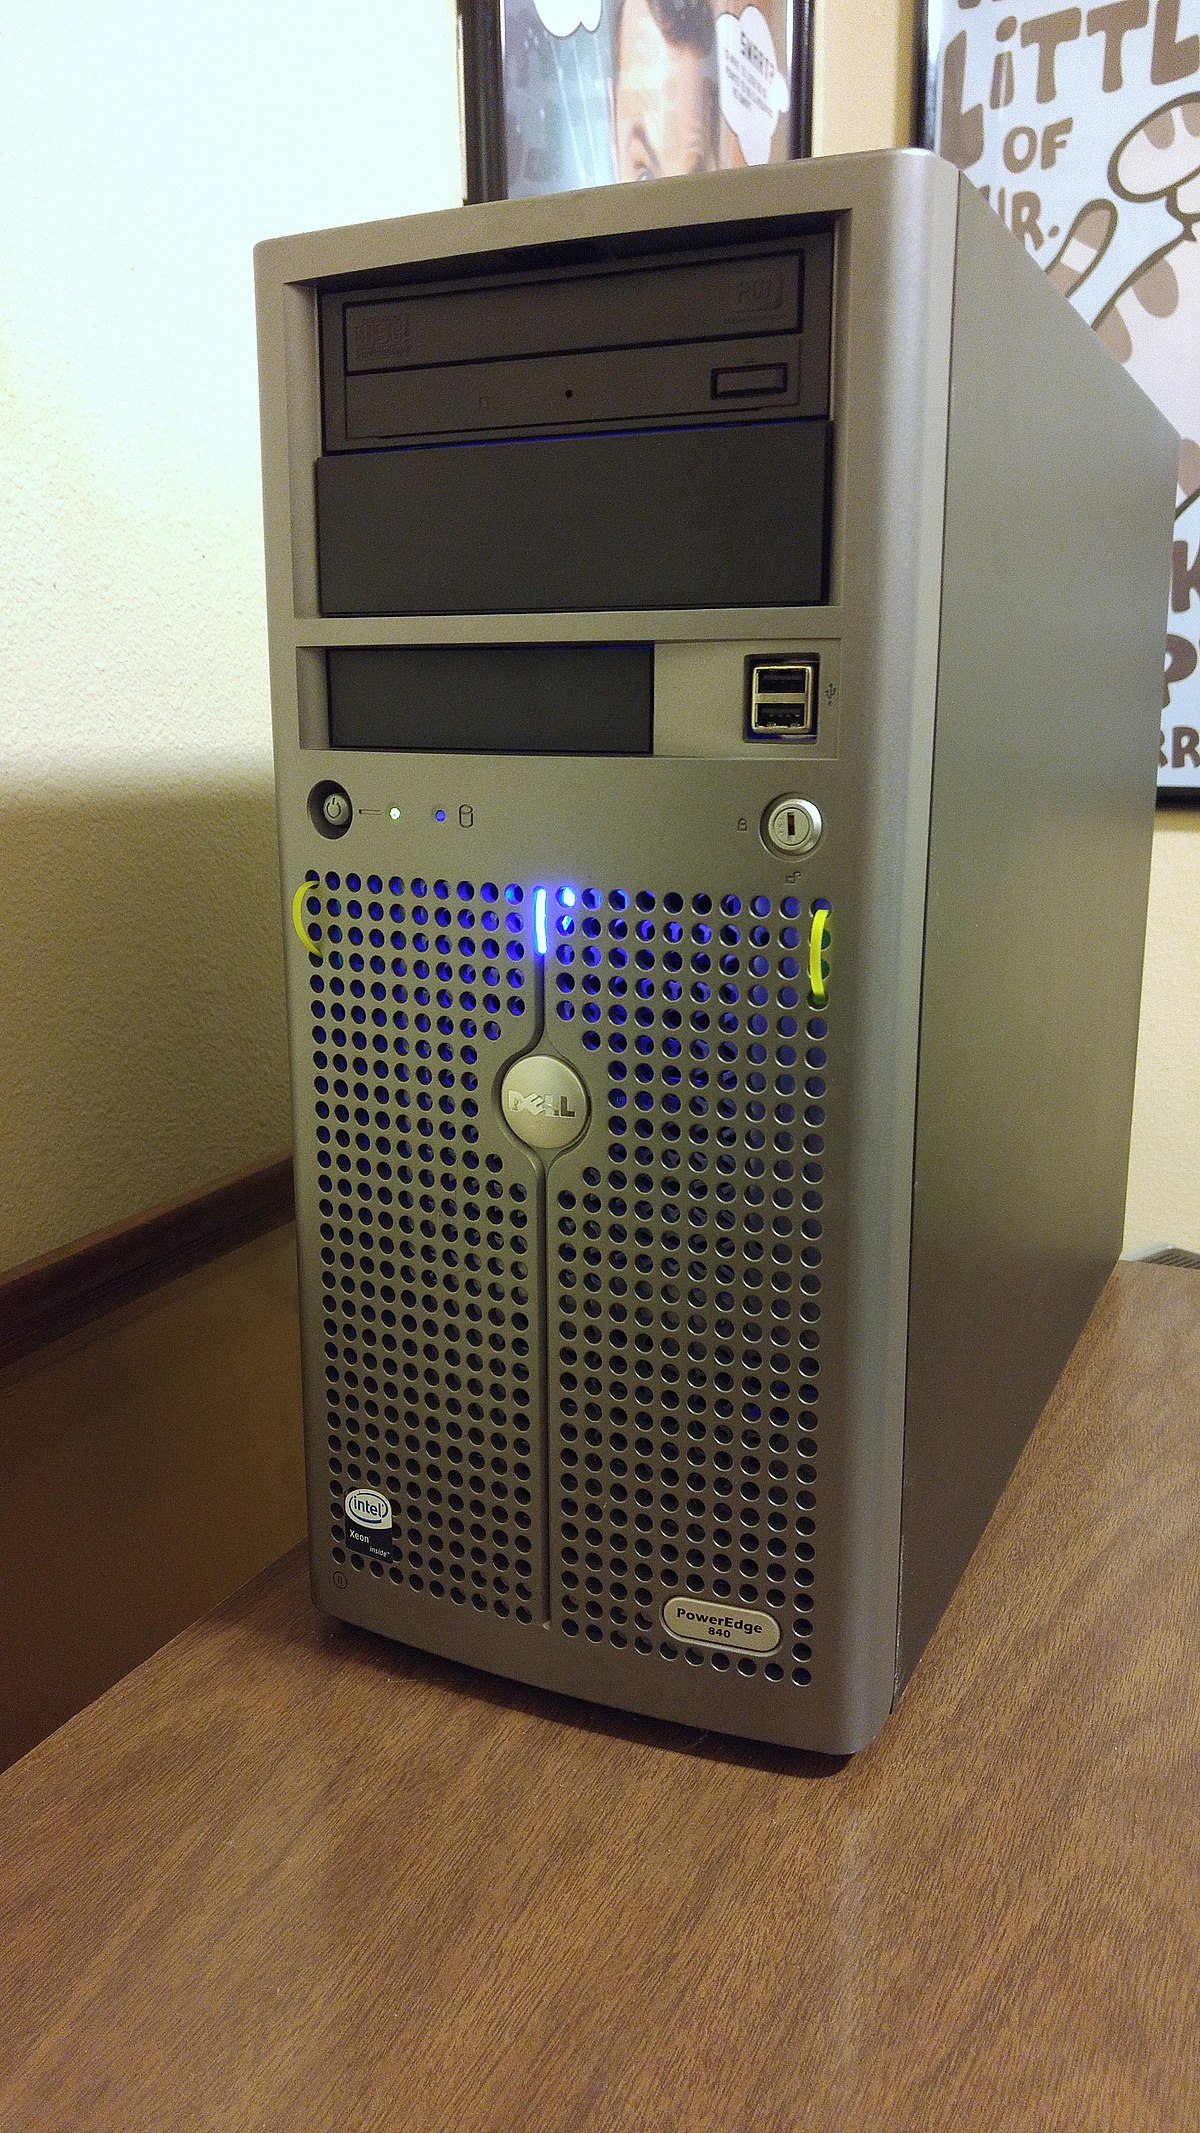 File:Dell PowerEdge 840 (32330320351).jpg - Wikimedia Commons